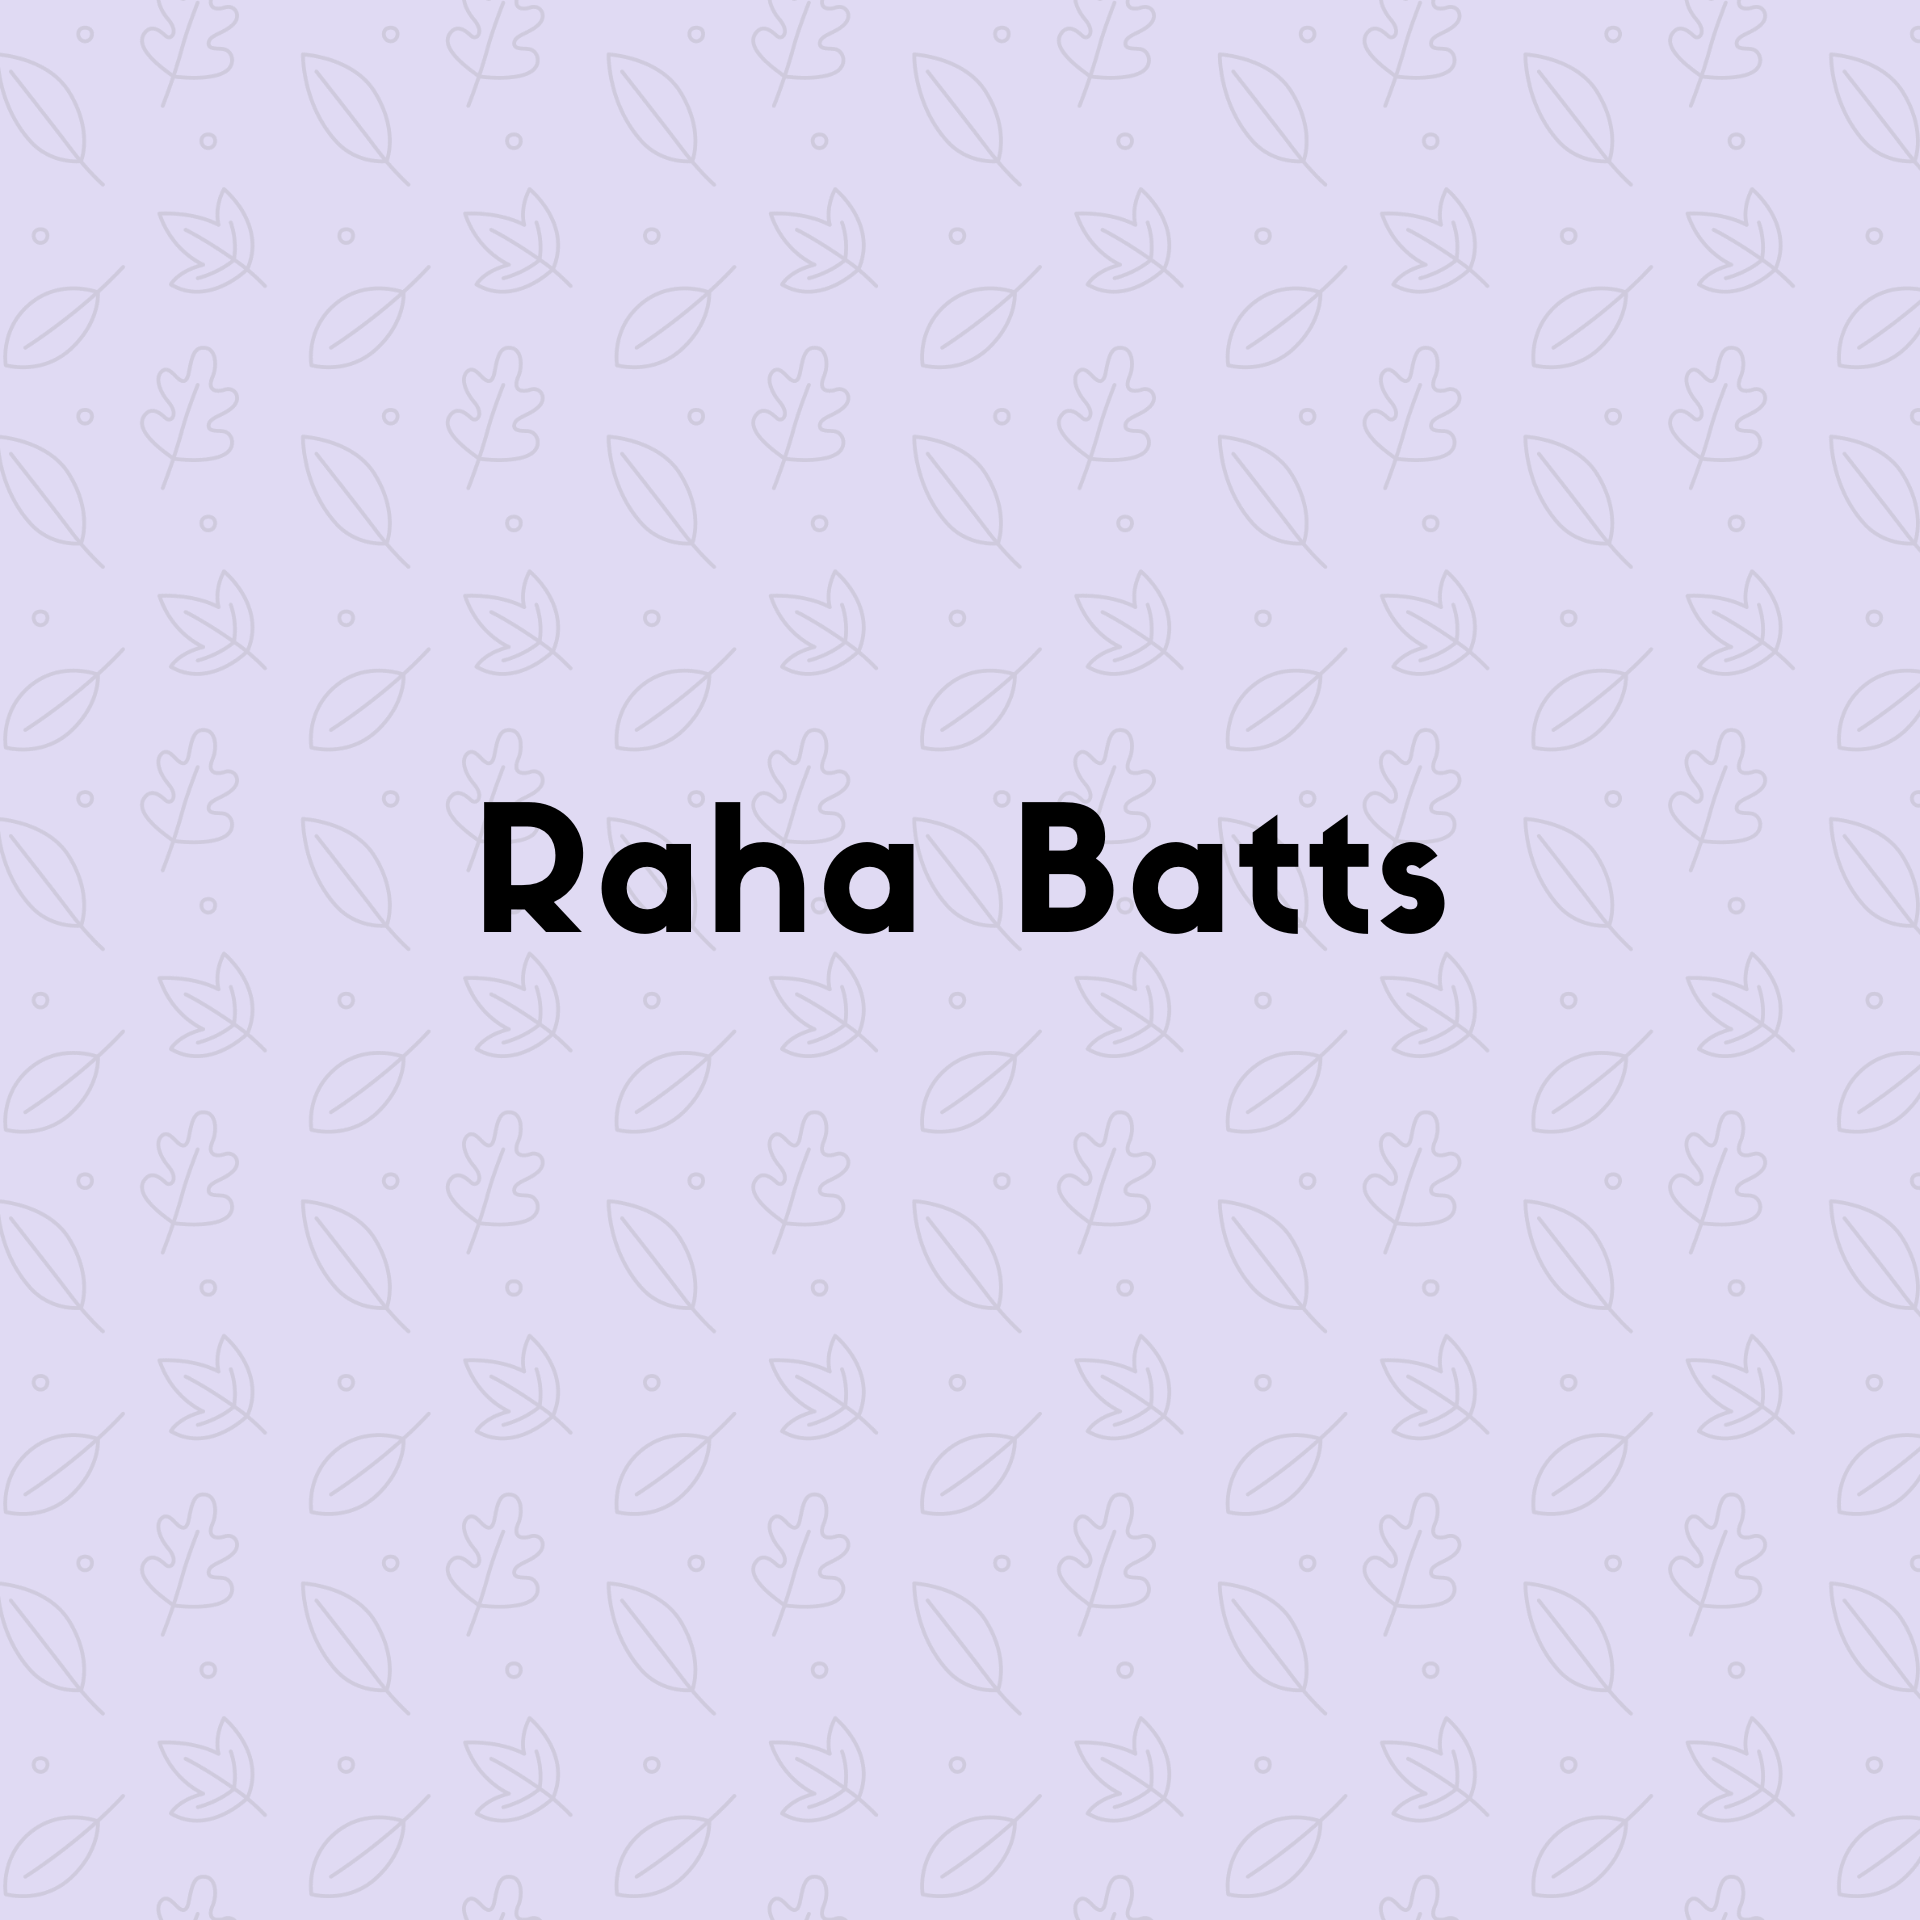  Raha Batts